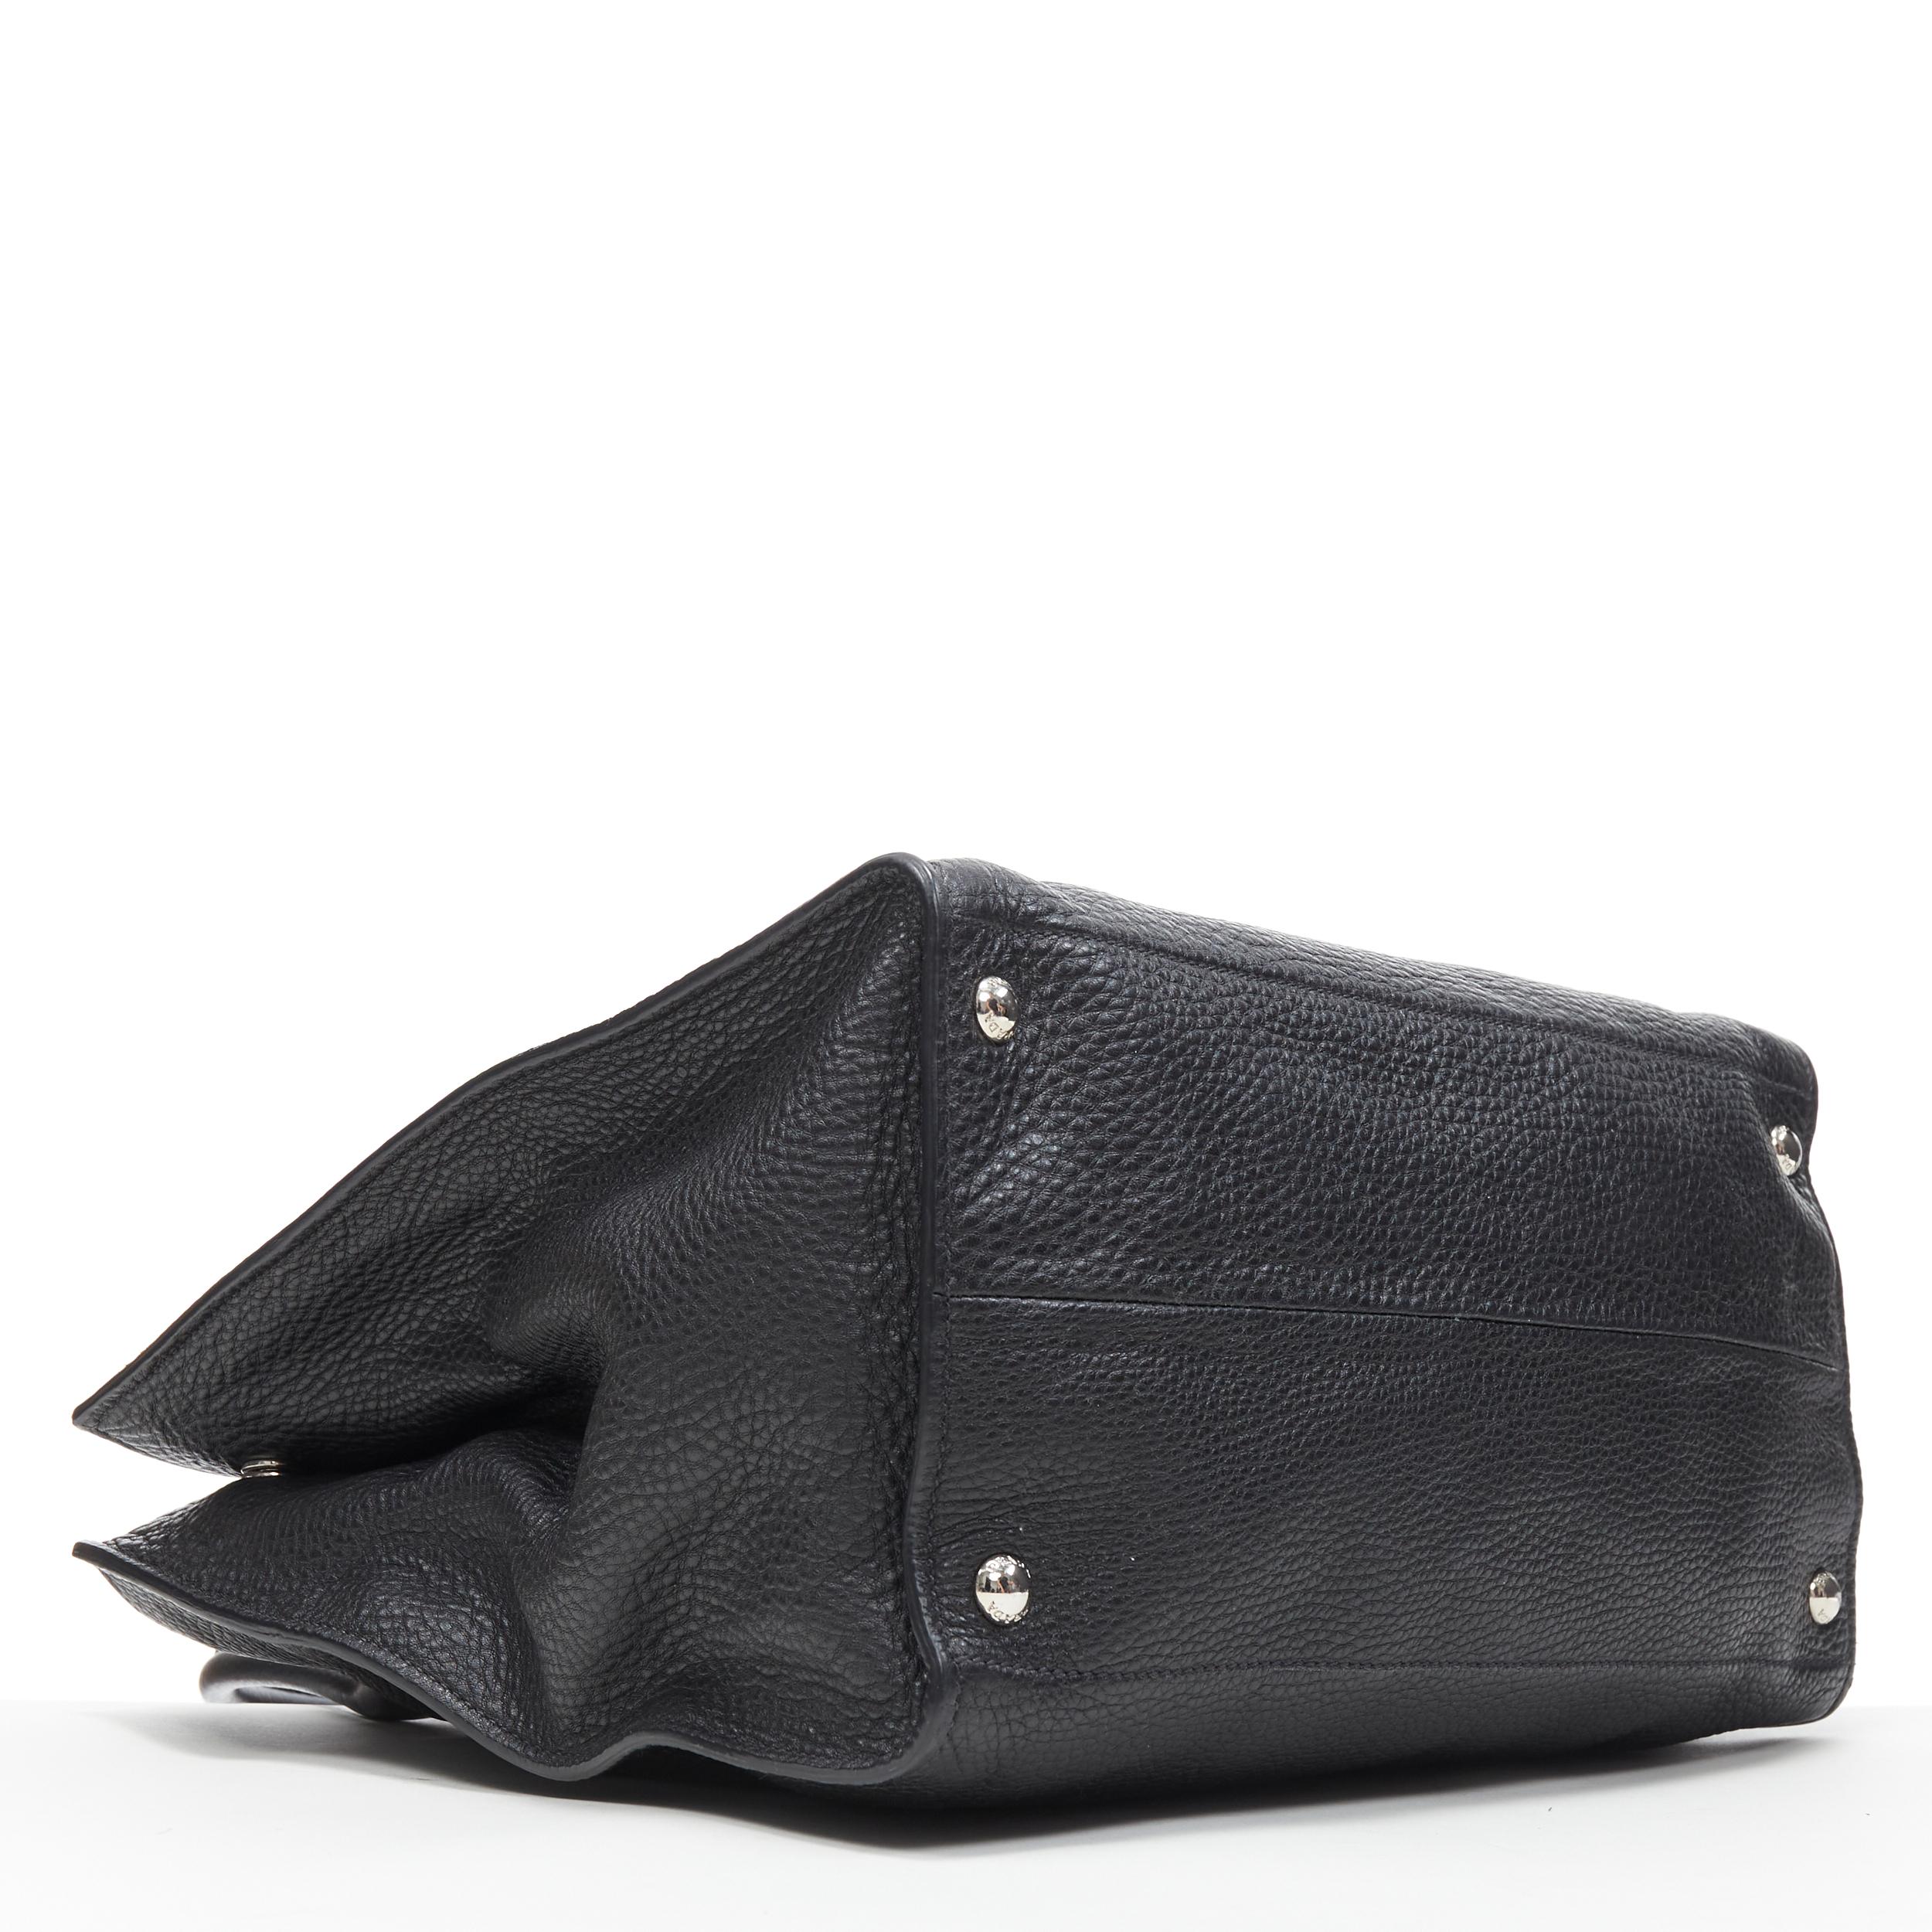 Black PRADA black grainy leather triangle logo small tote bag